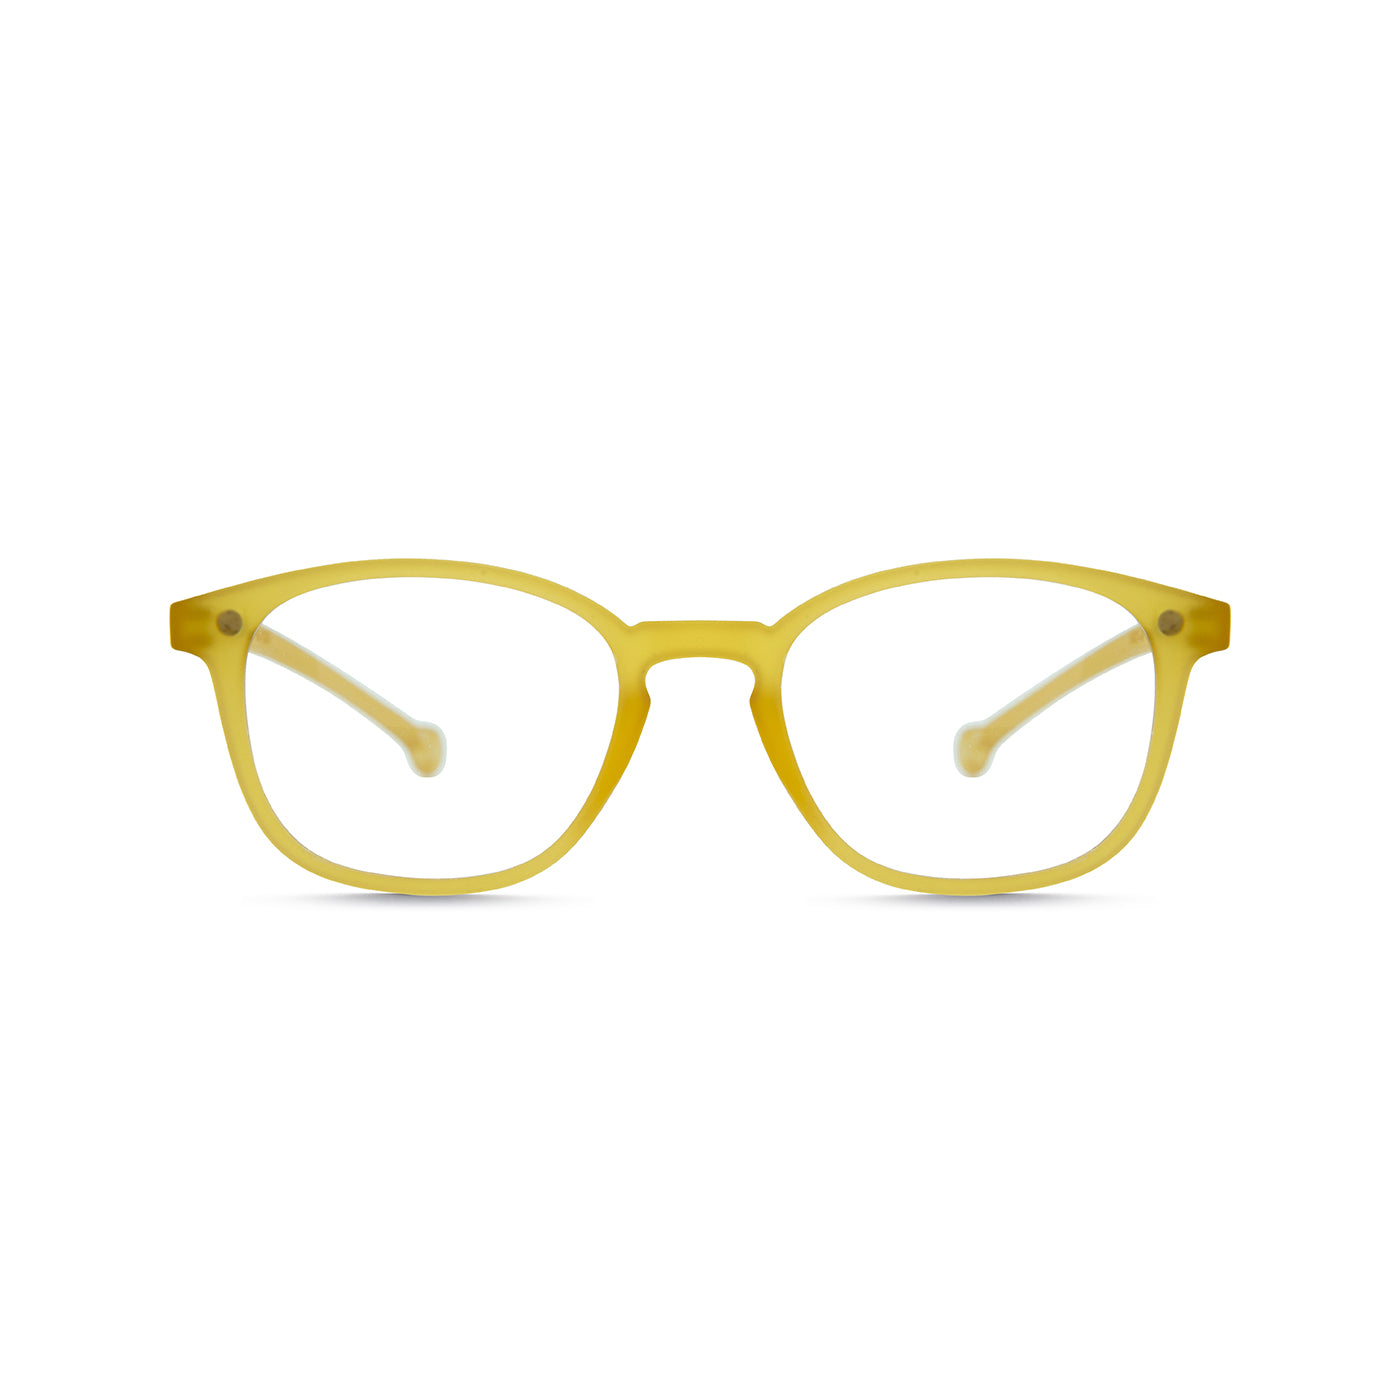 Parafina Screen/Reading Glasses - SENA Mustard